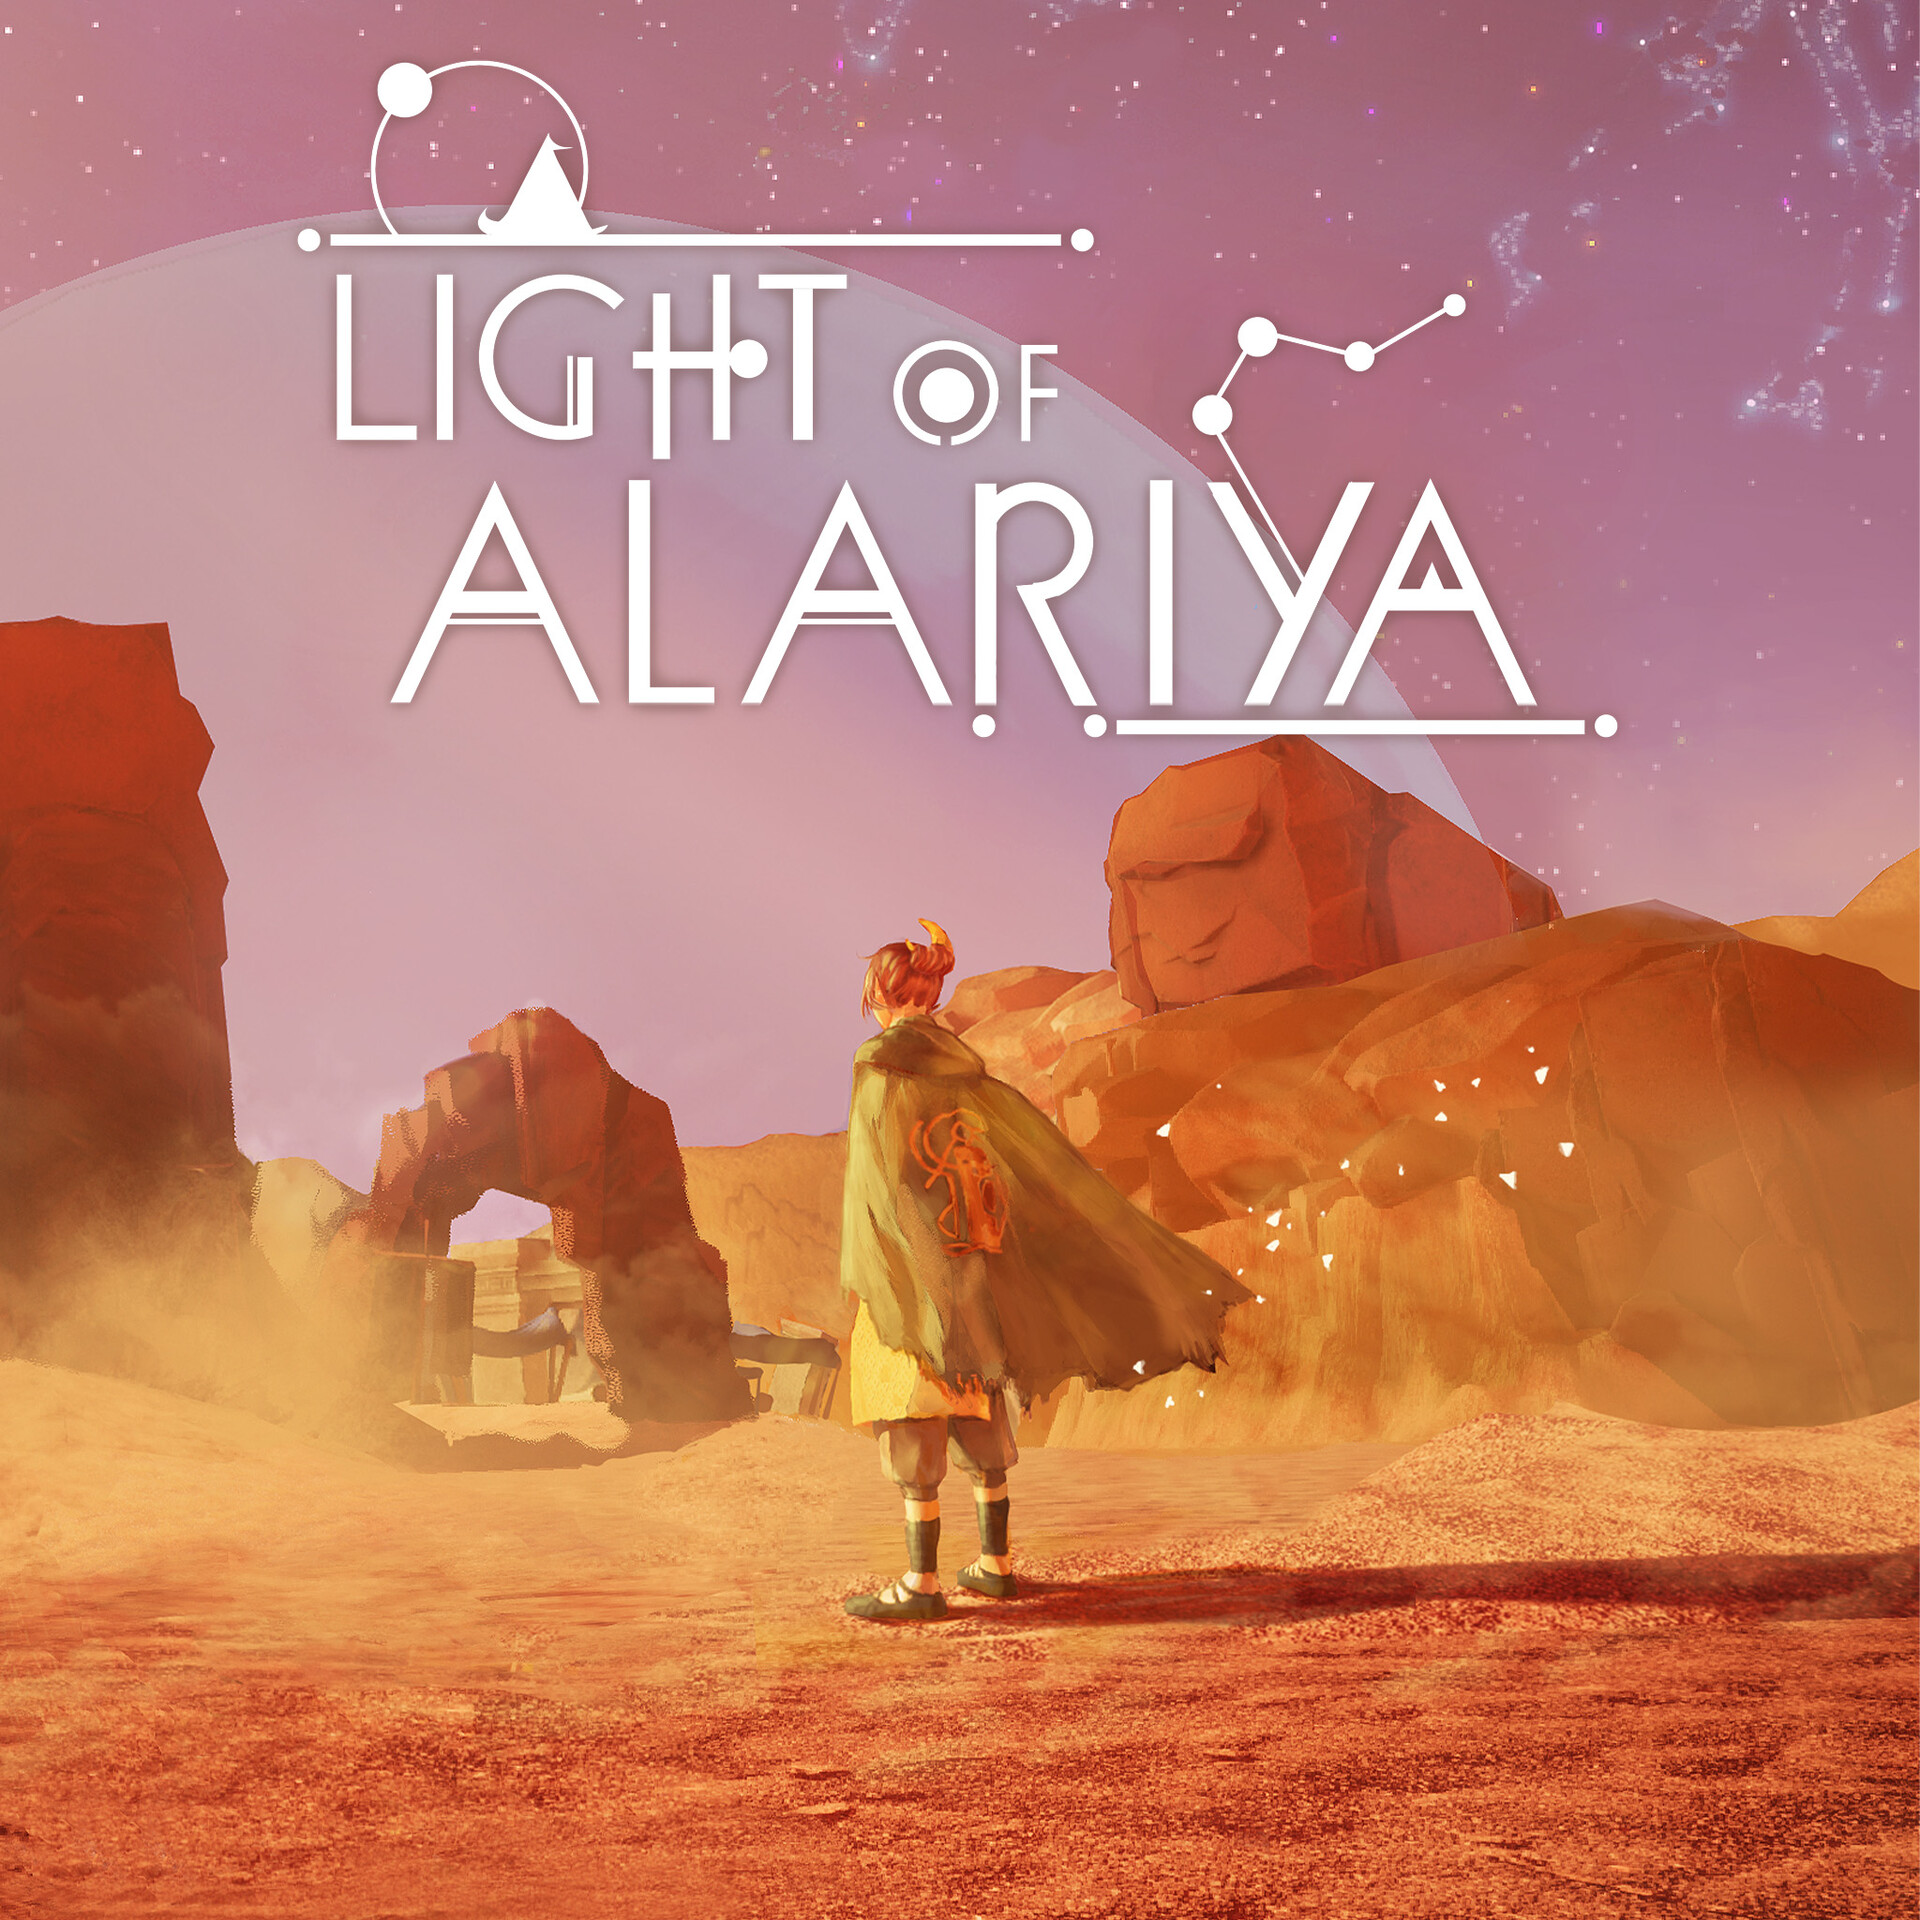 download the new for apple Light of Alariya